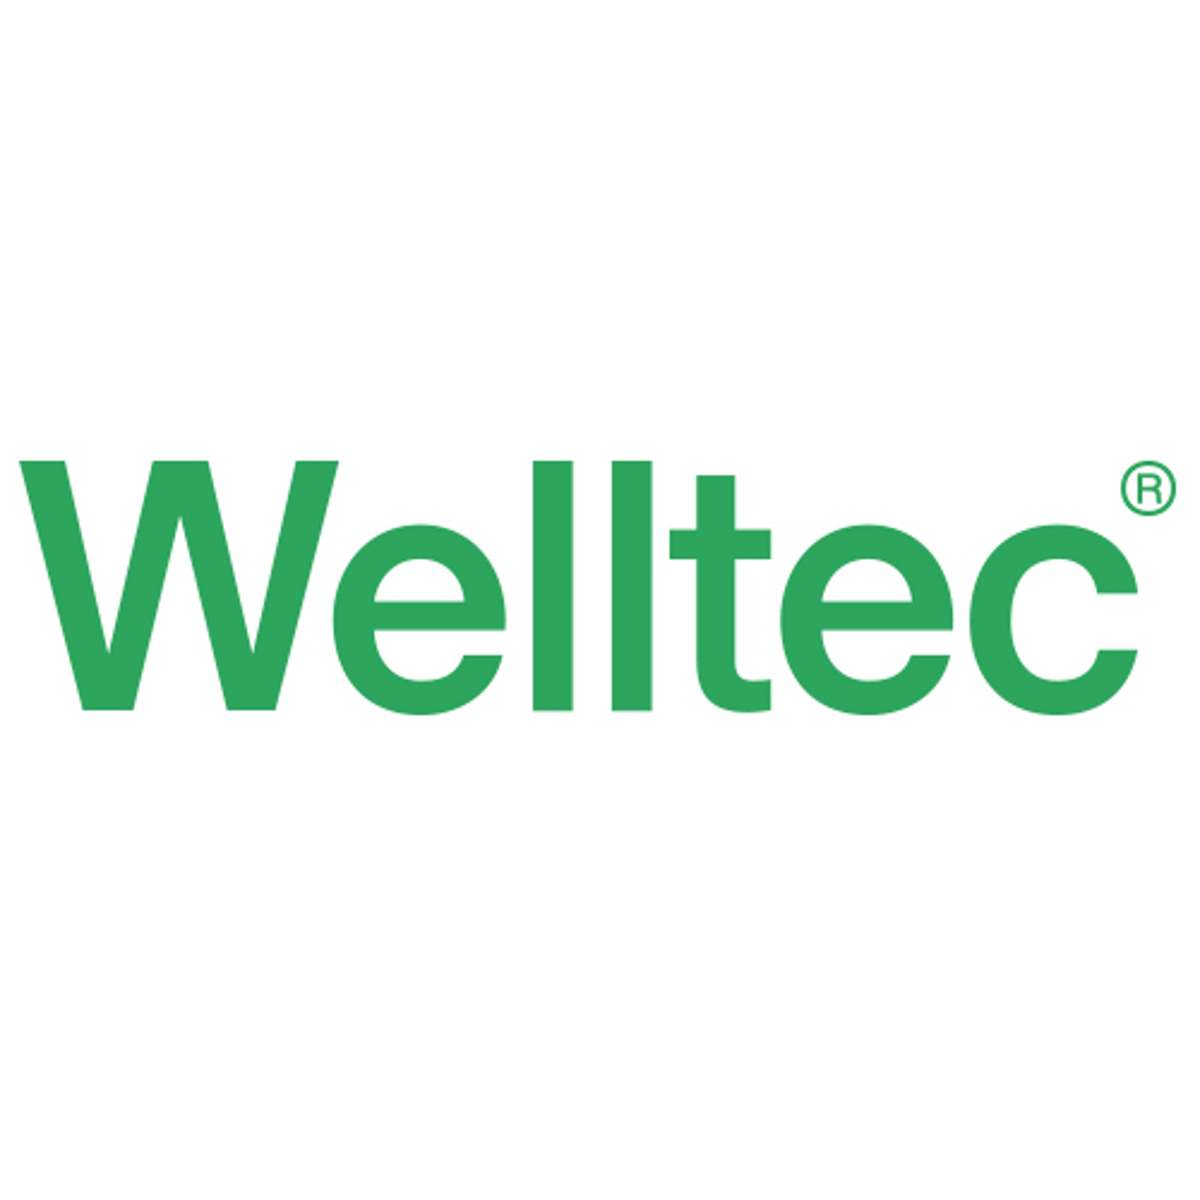 (c) Welltec.com